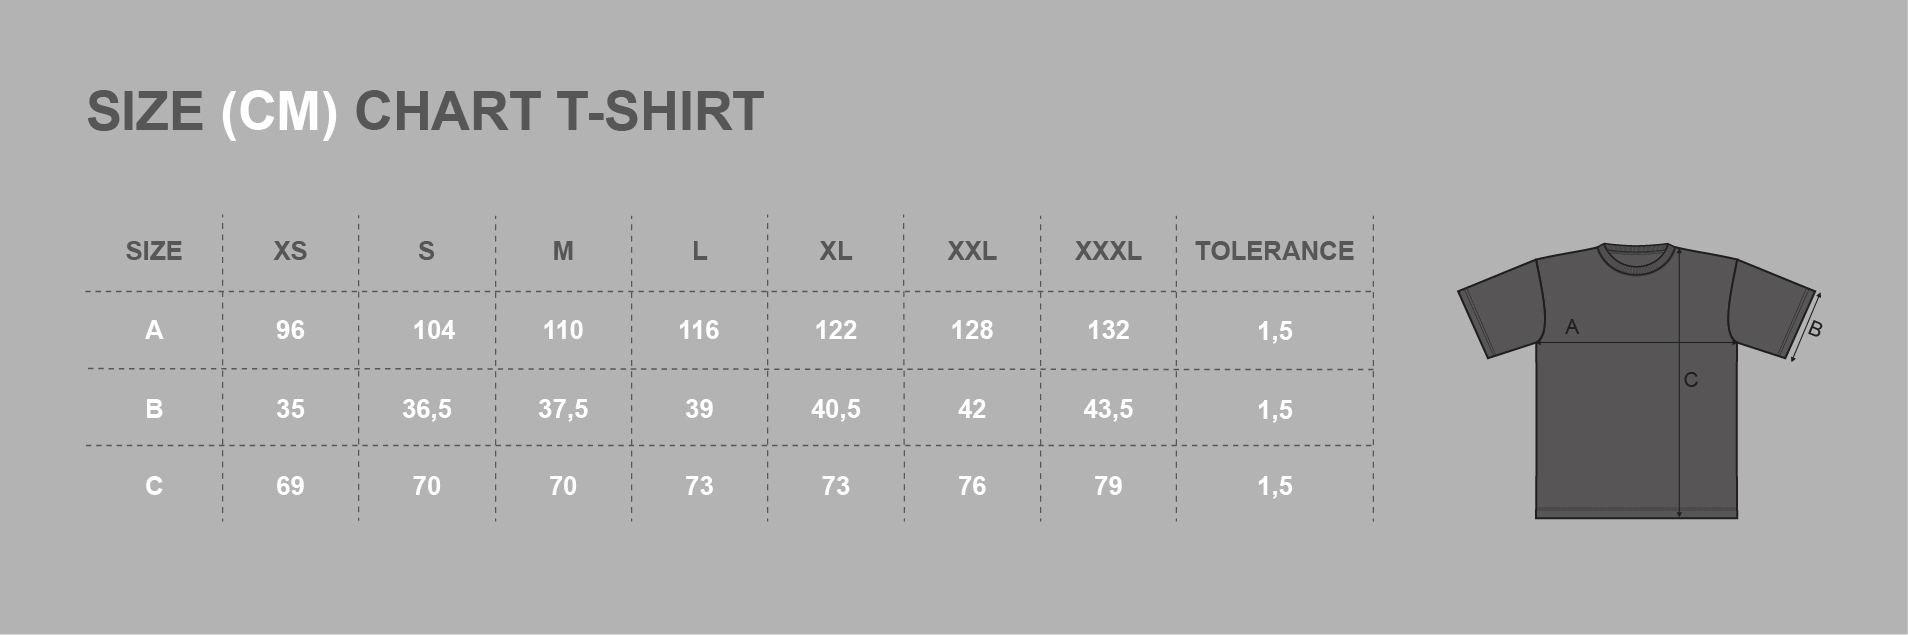 T-Shirt "Guardian" - Rigid Rules # RigidRules.com - koszulki, dresy, bluzy, legginsy